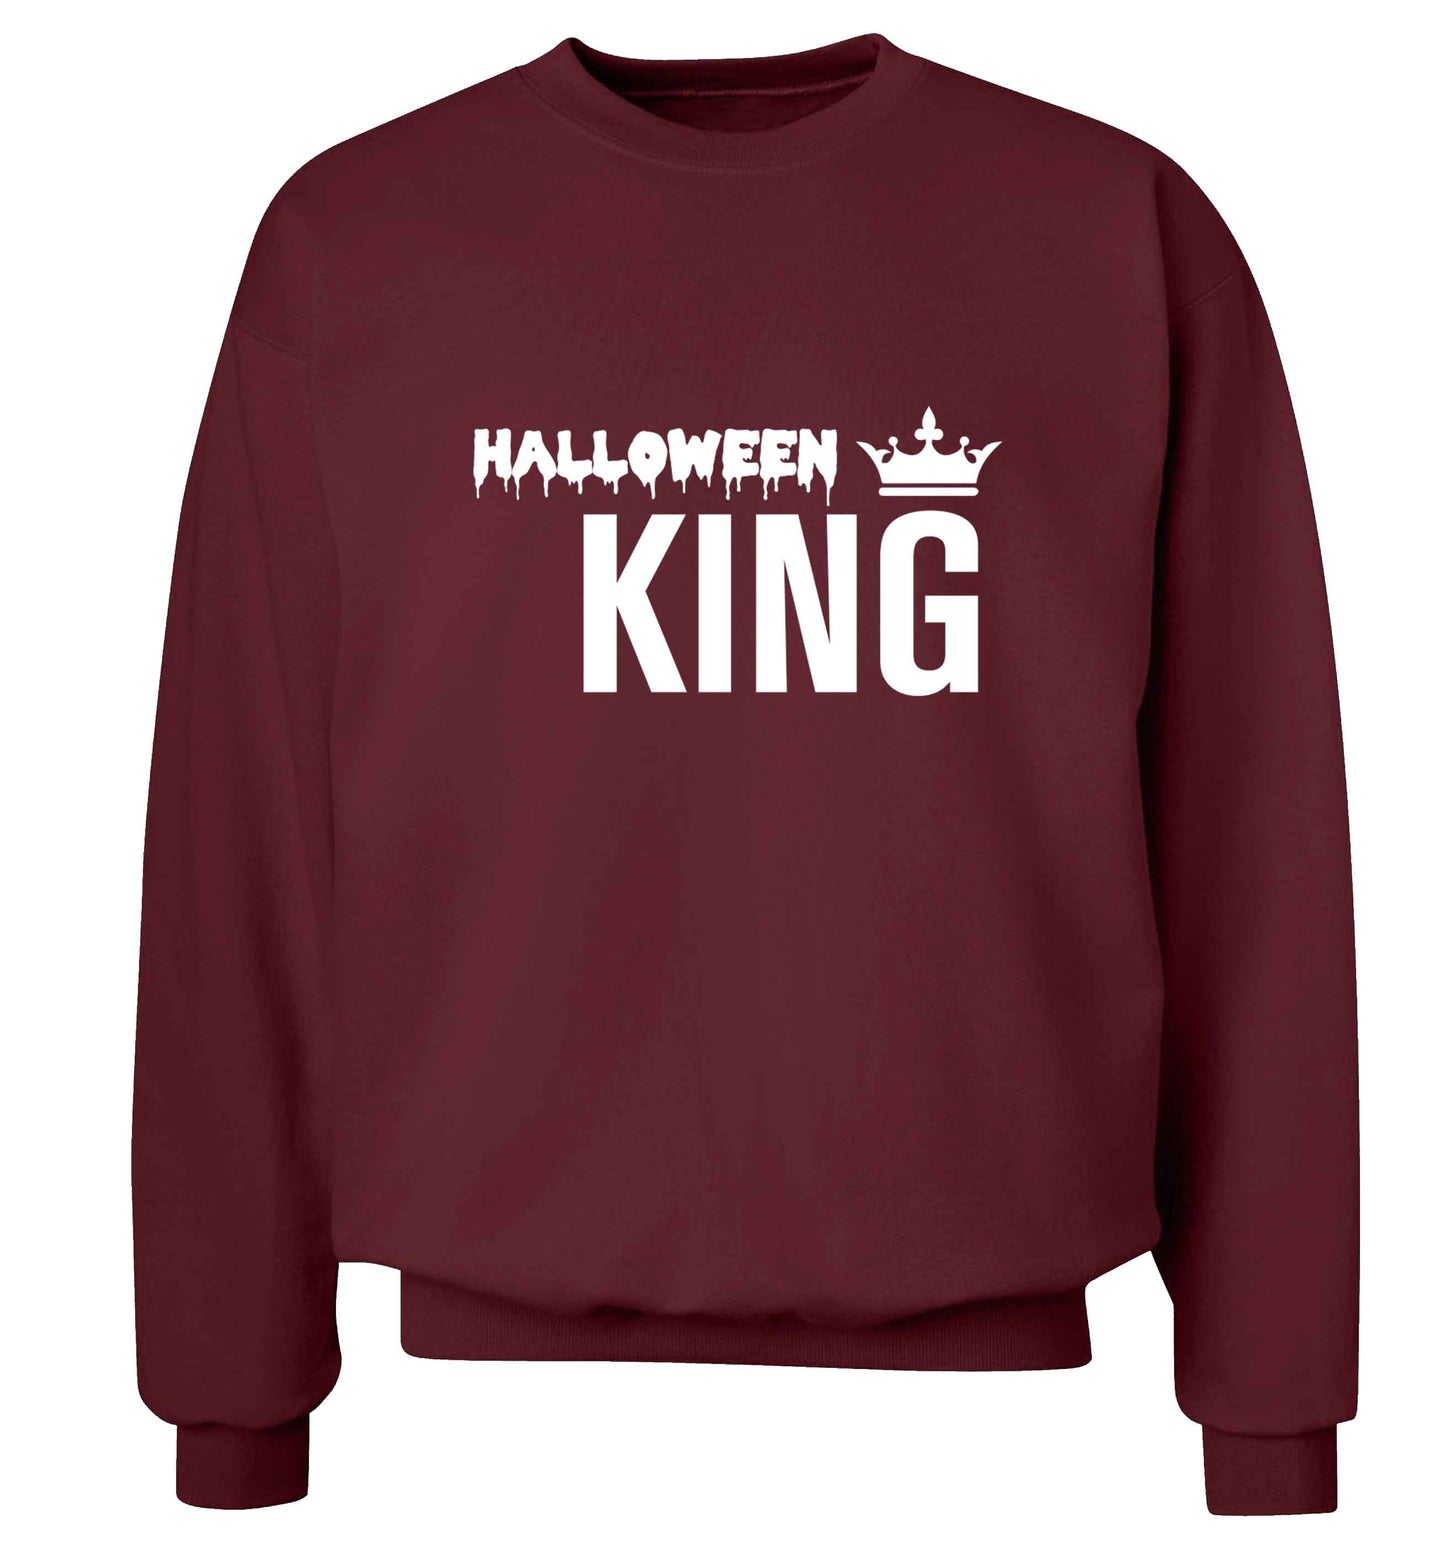 Halloween king adult's unisex maroon sweater 2XL